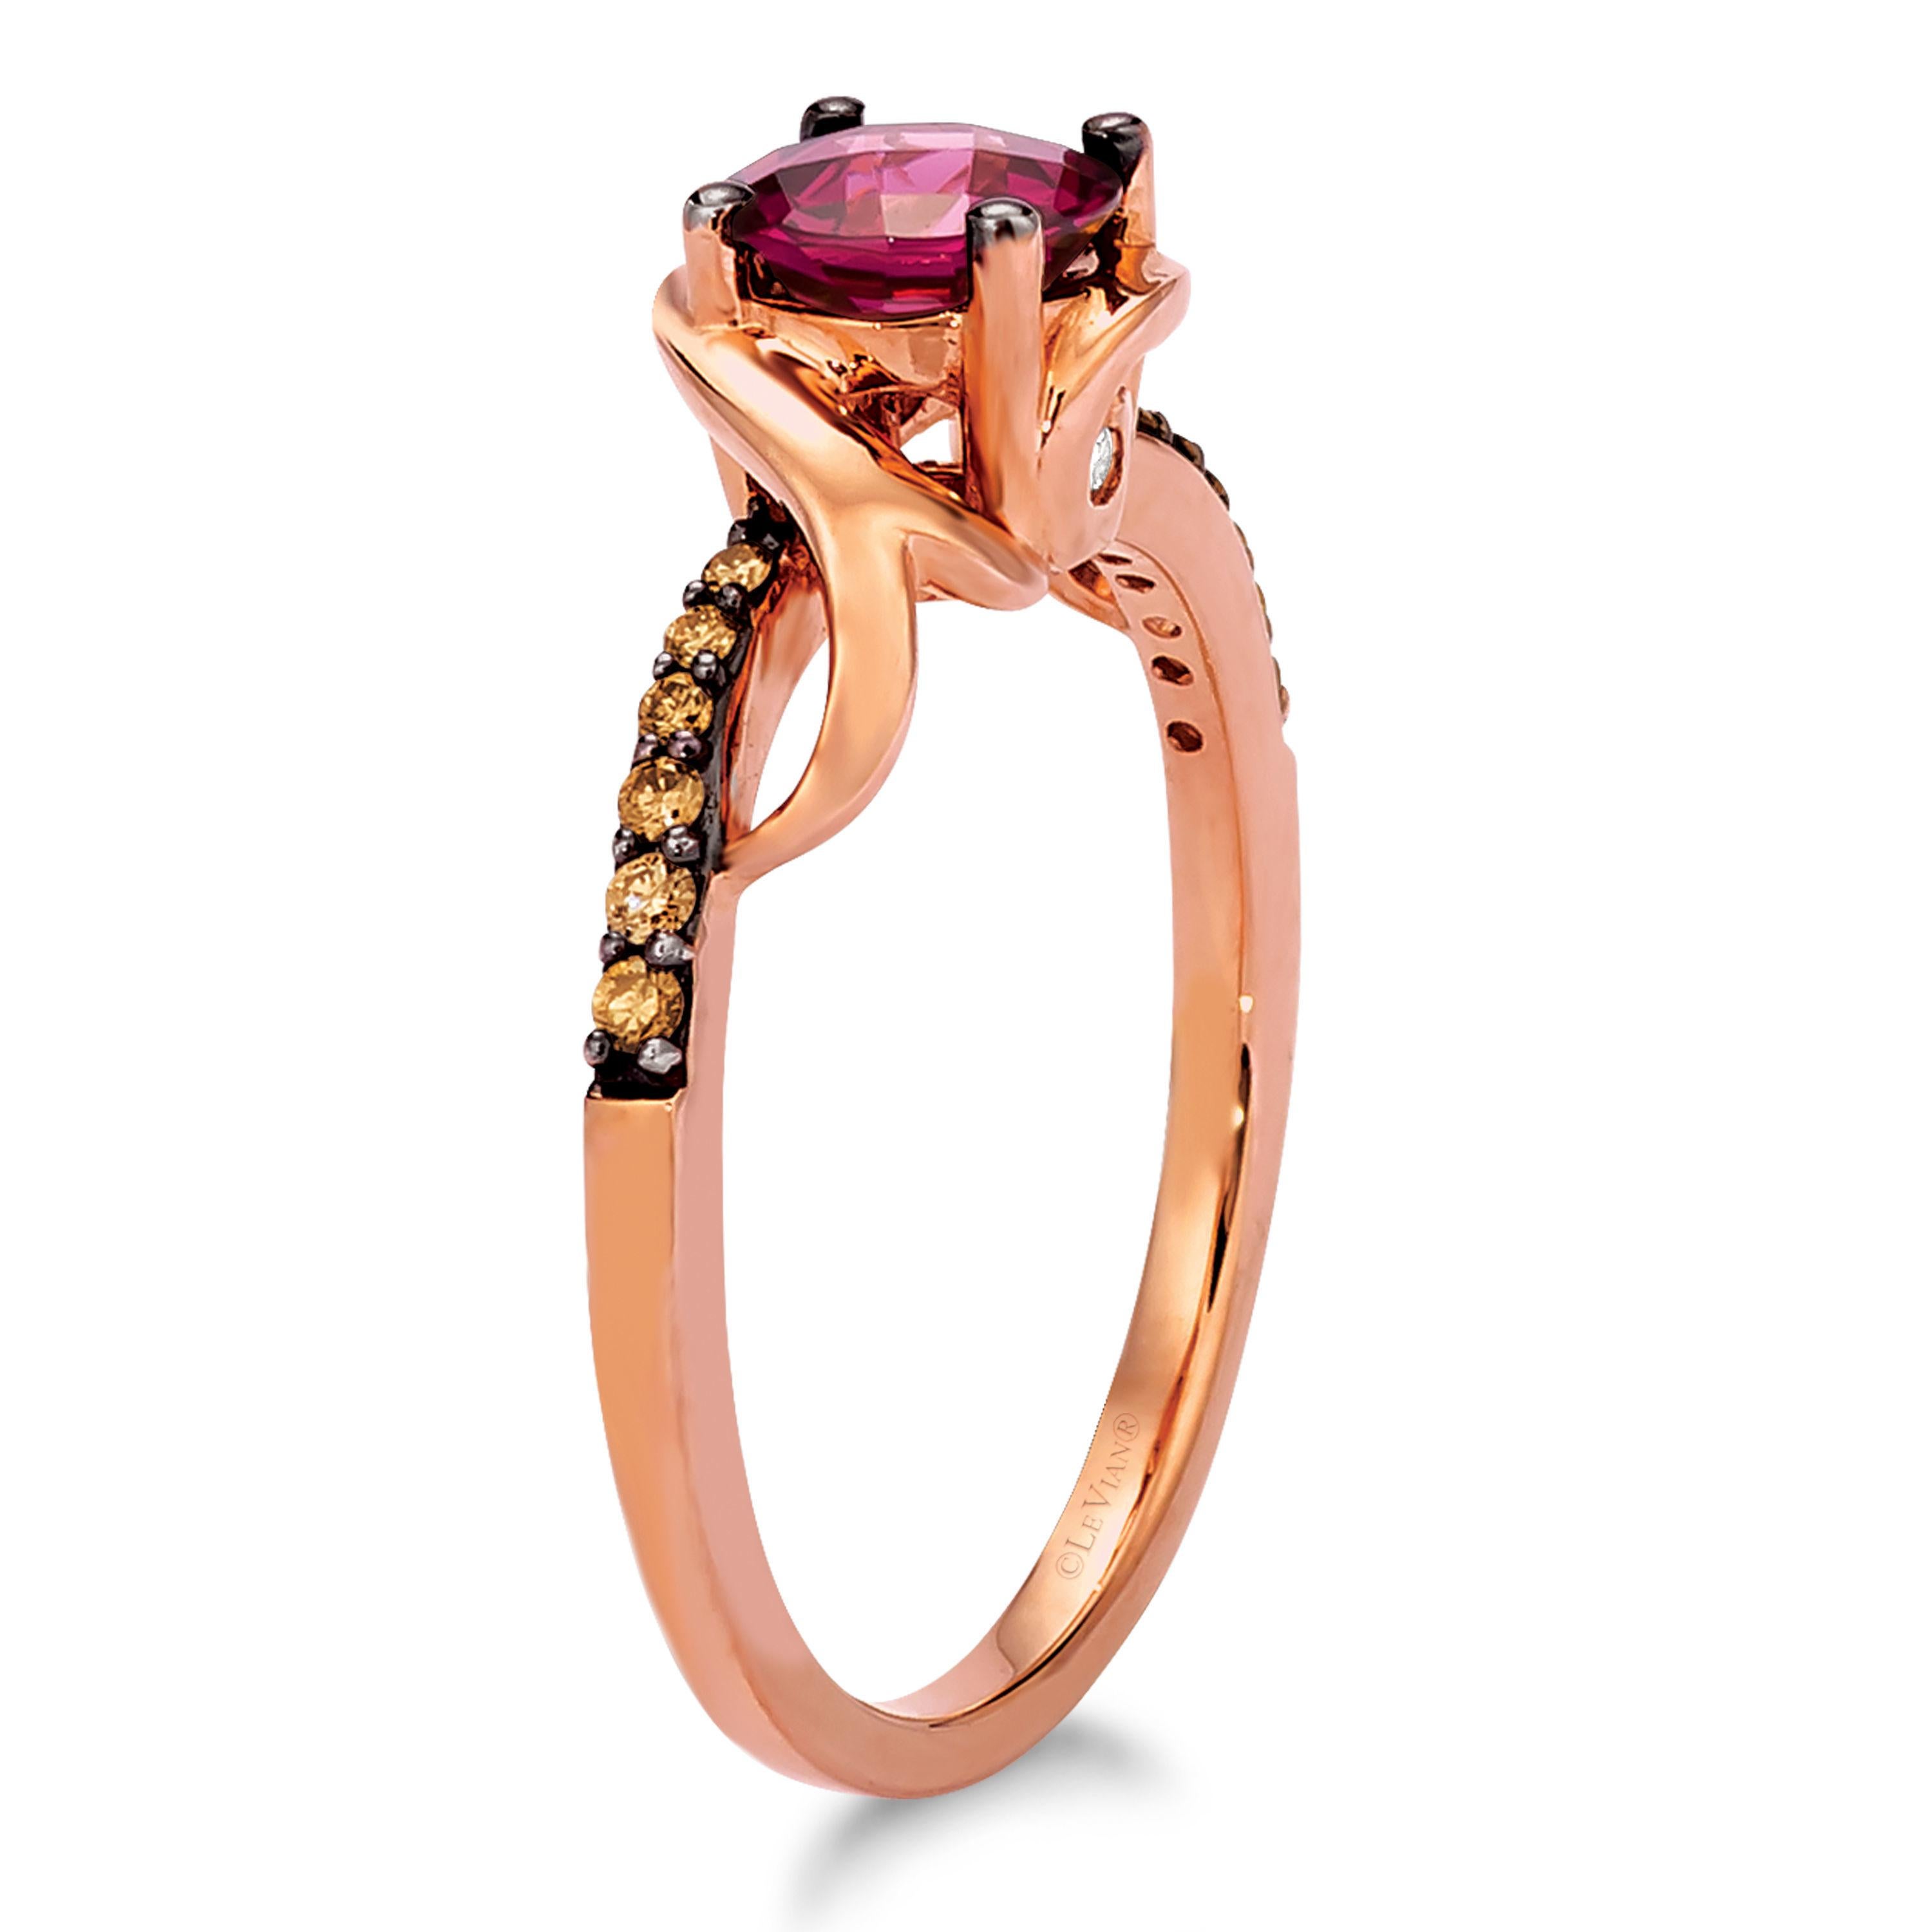 LeVian 14K Rose Gold, Rhodolite Garnet Chocolate Diamond Bypass Ring - Size 5.5